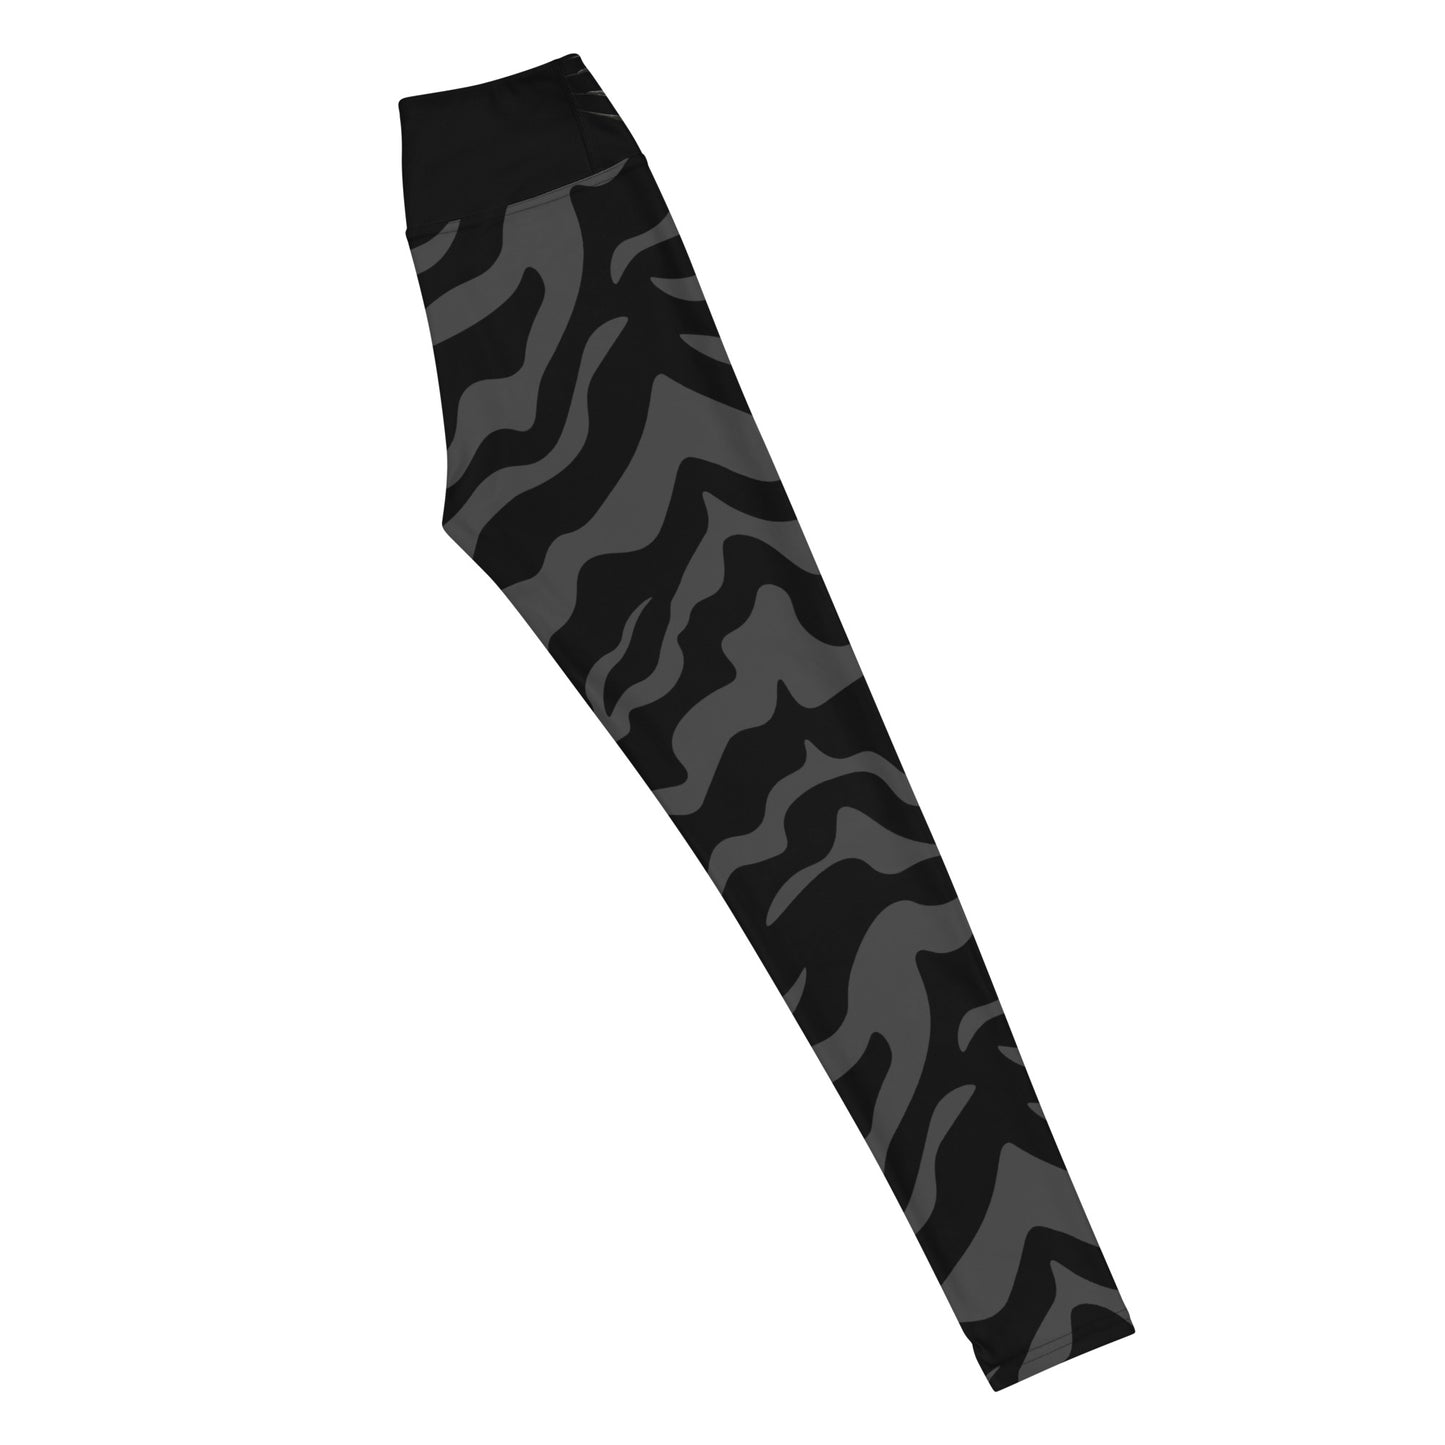 Fierce Tigress - Yoga Leggings - Black/Gray - Wild Style Shop